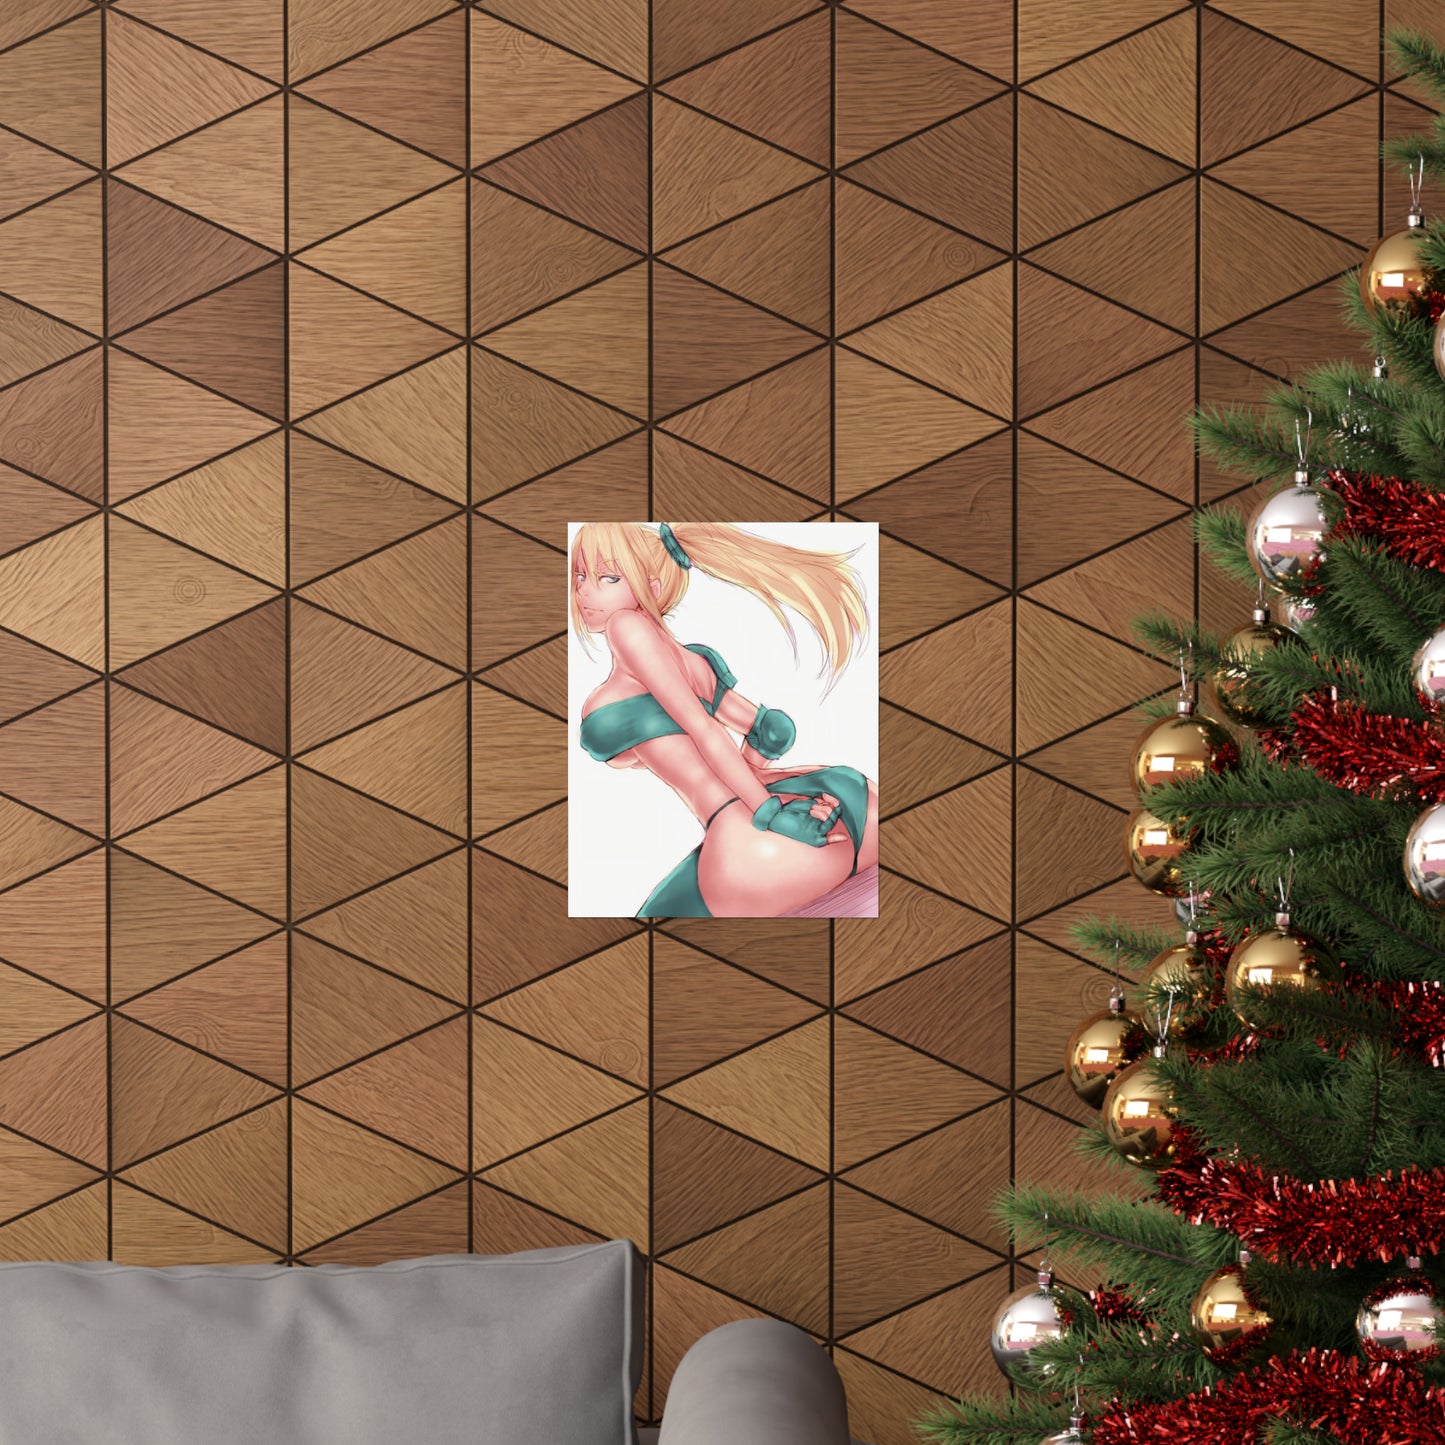 Sexy Samus Aran Metroid Poster - Lewd Premium Matte Vertical Poster - Adult Wall Art